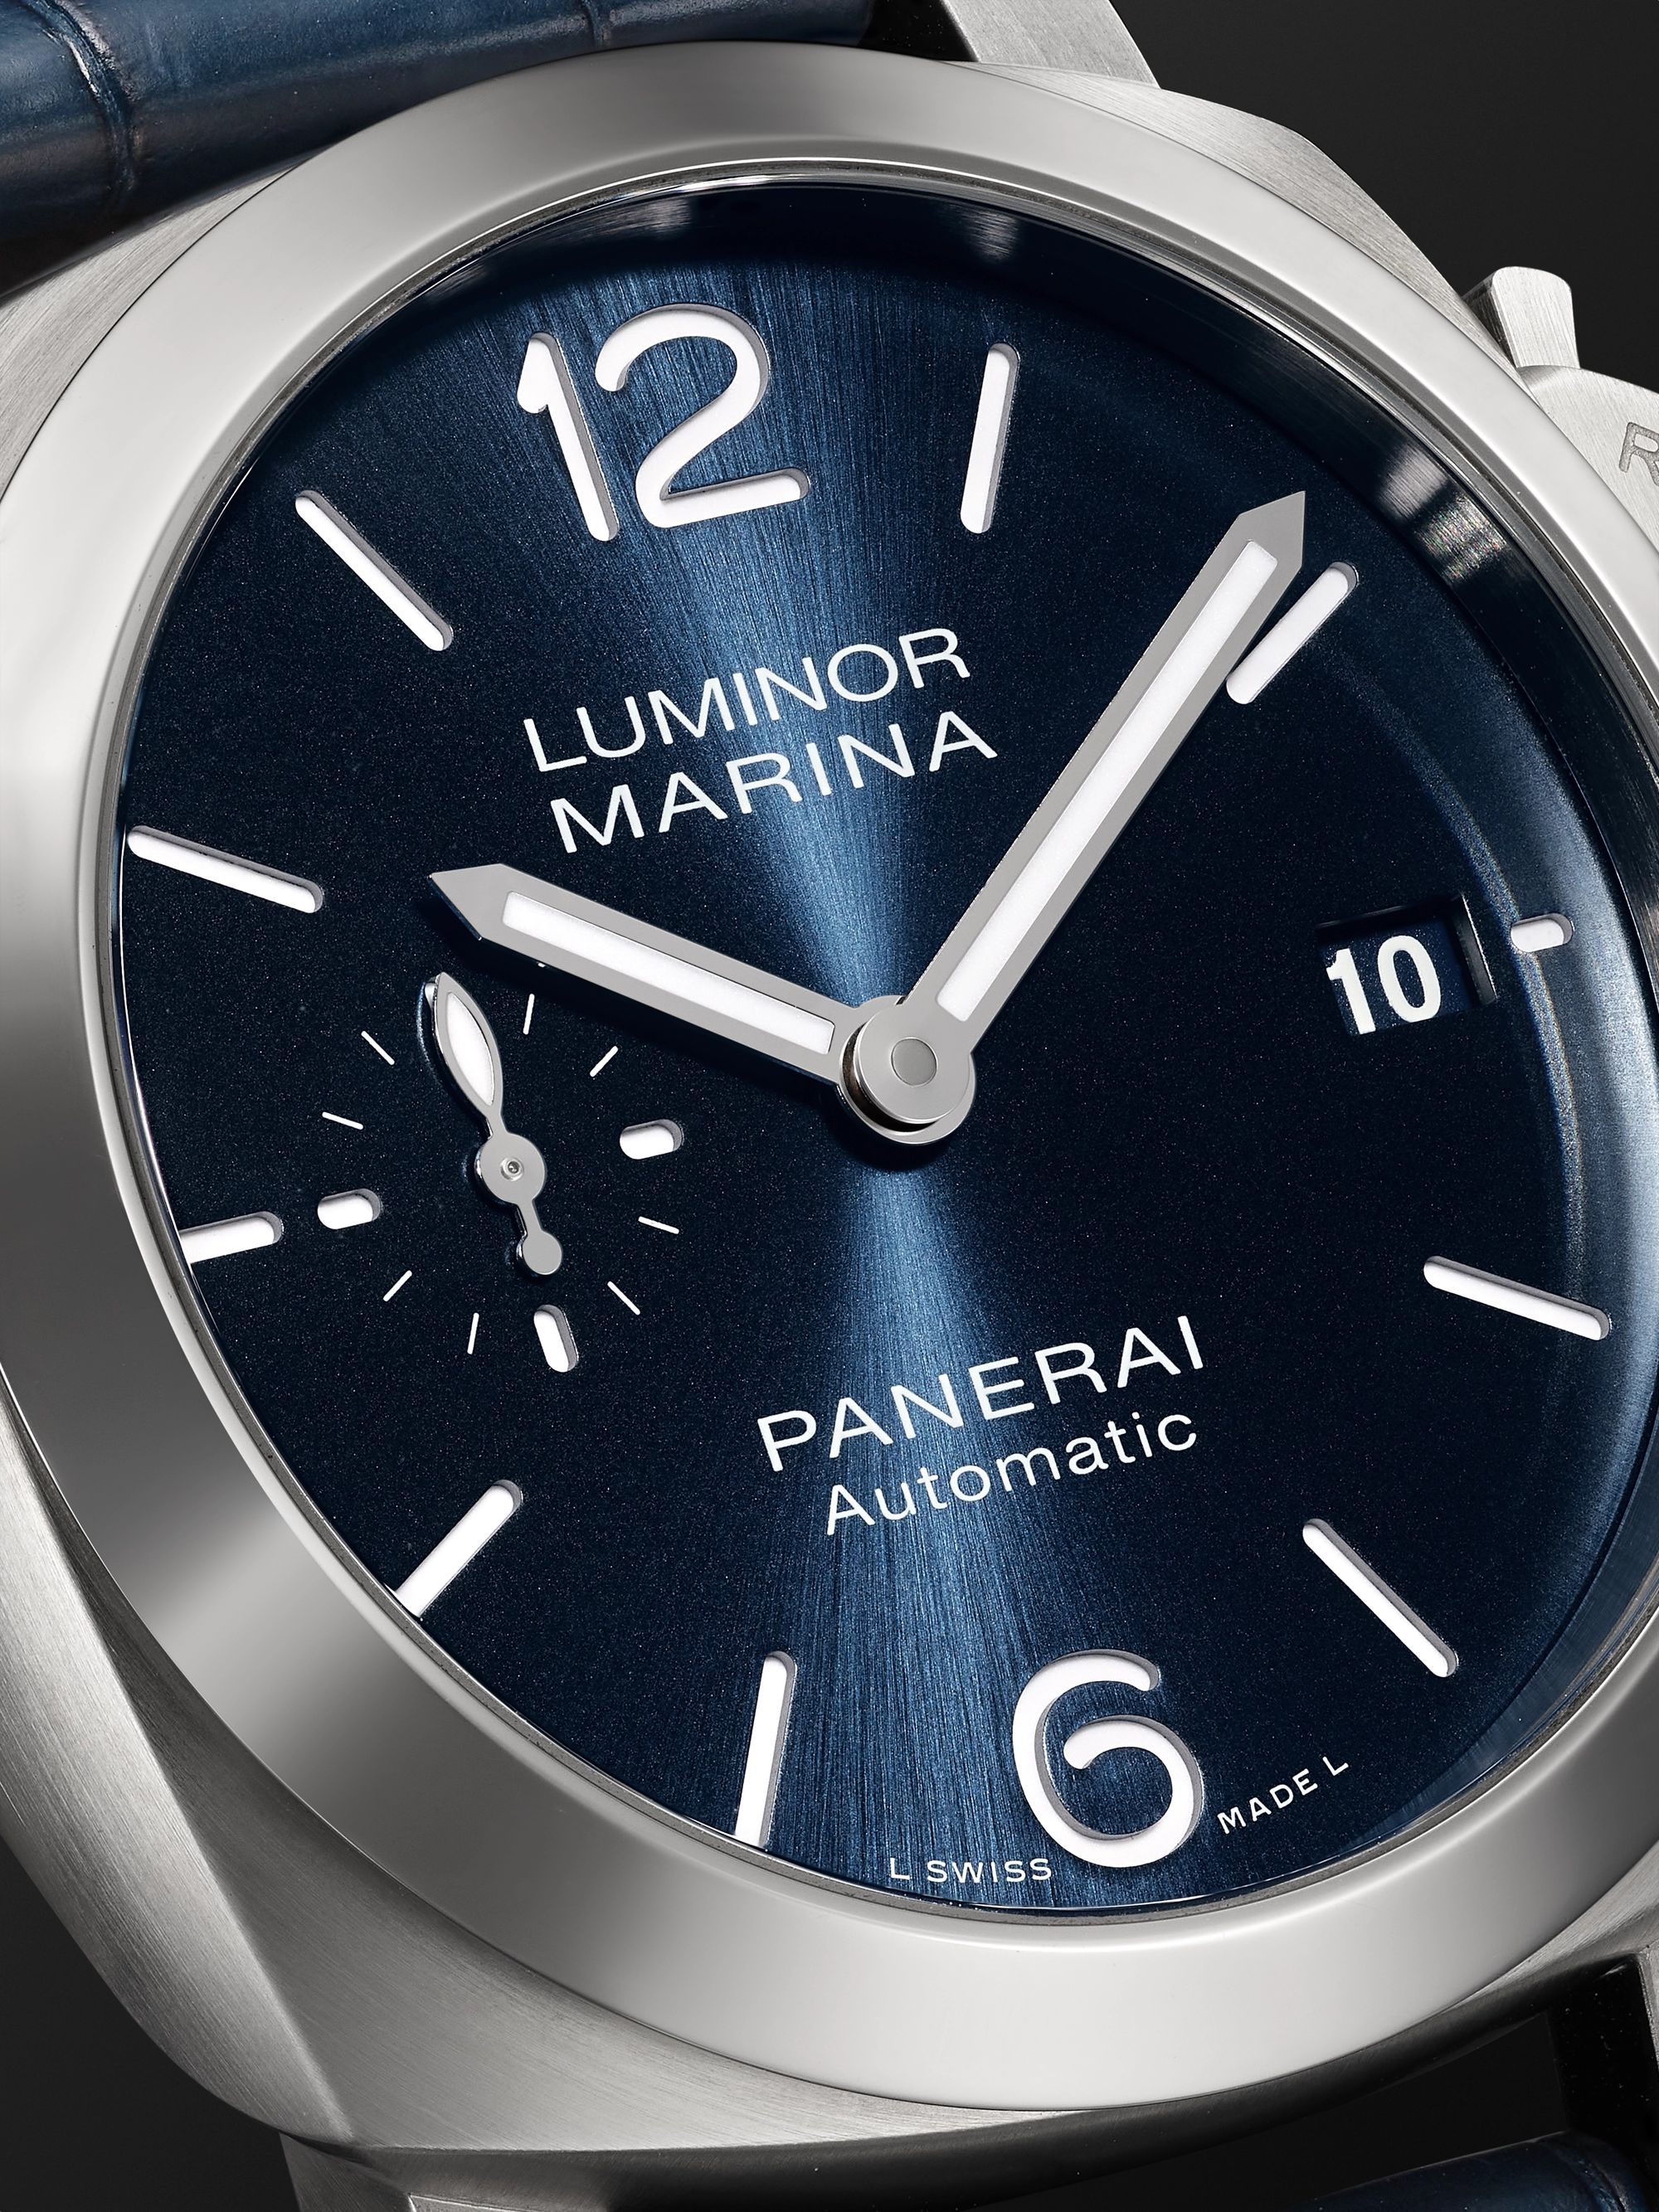 PANERAI Luminor Marina Quaranta Automatic 40mm Stainless Steel and Alligator Watch, Ref. No. PAM01270